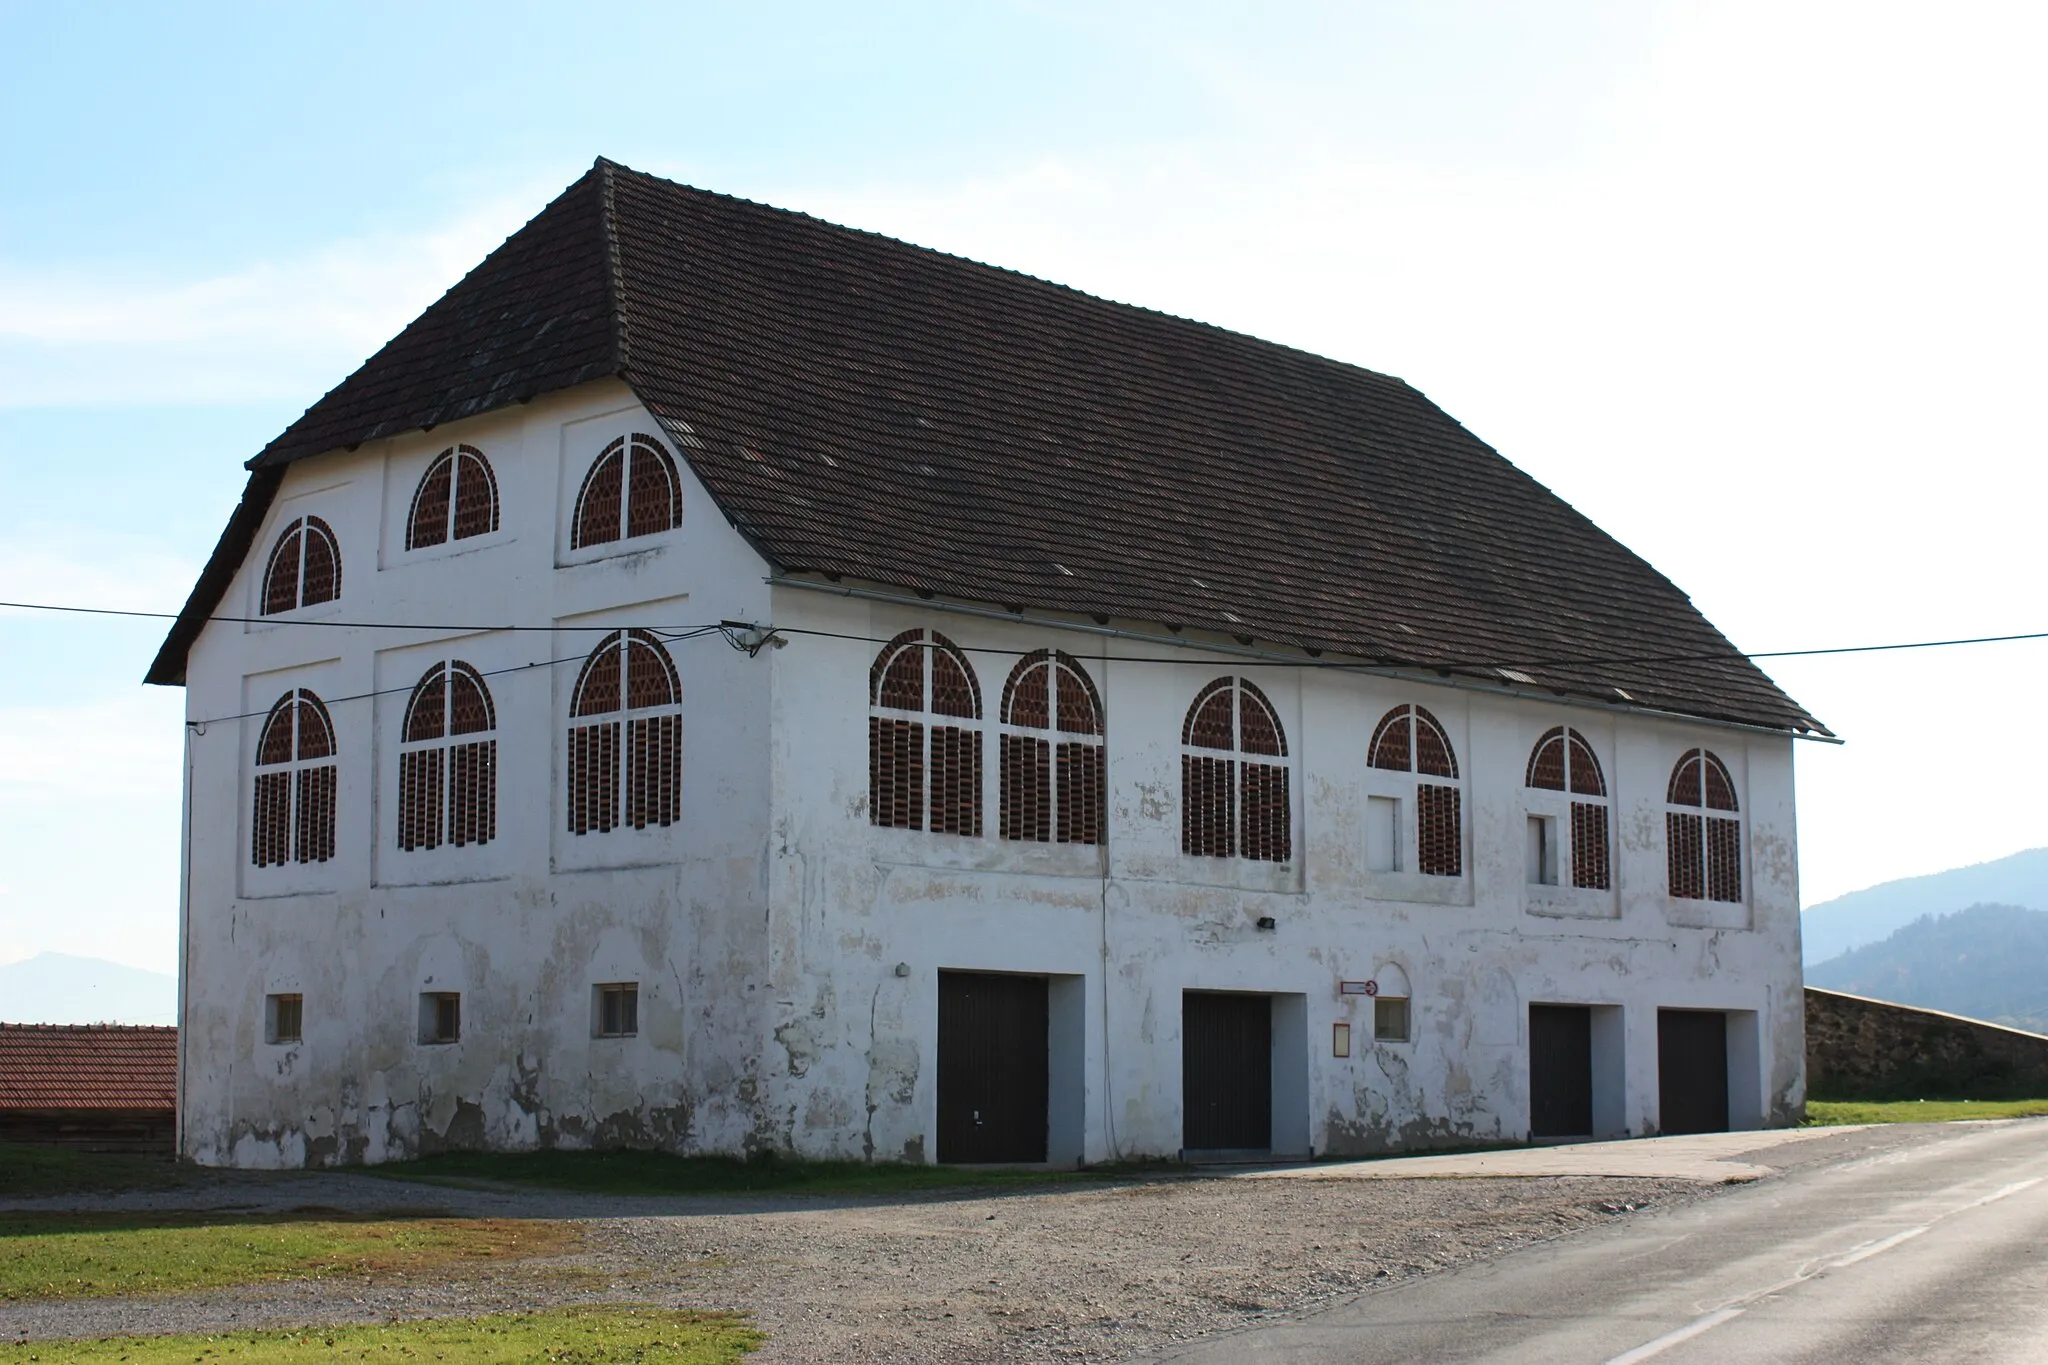 Photo showing: Farm building
Locality:Hörzendorf

Community:Sankt Veit an der Glan